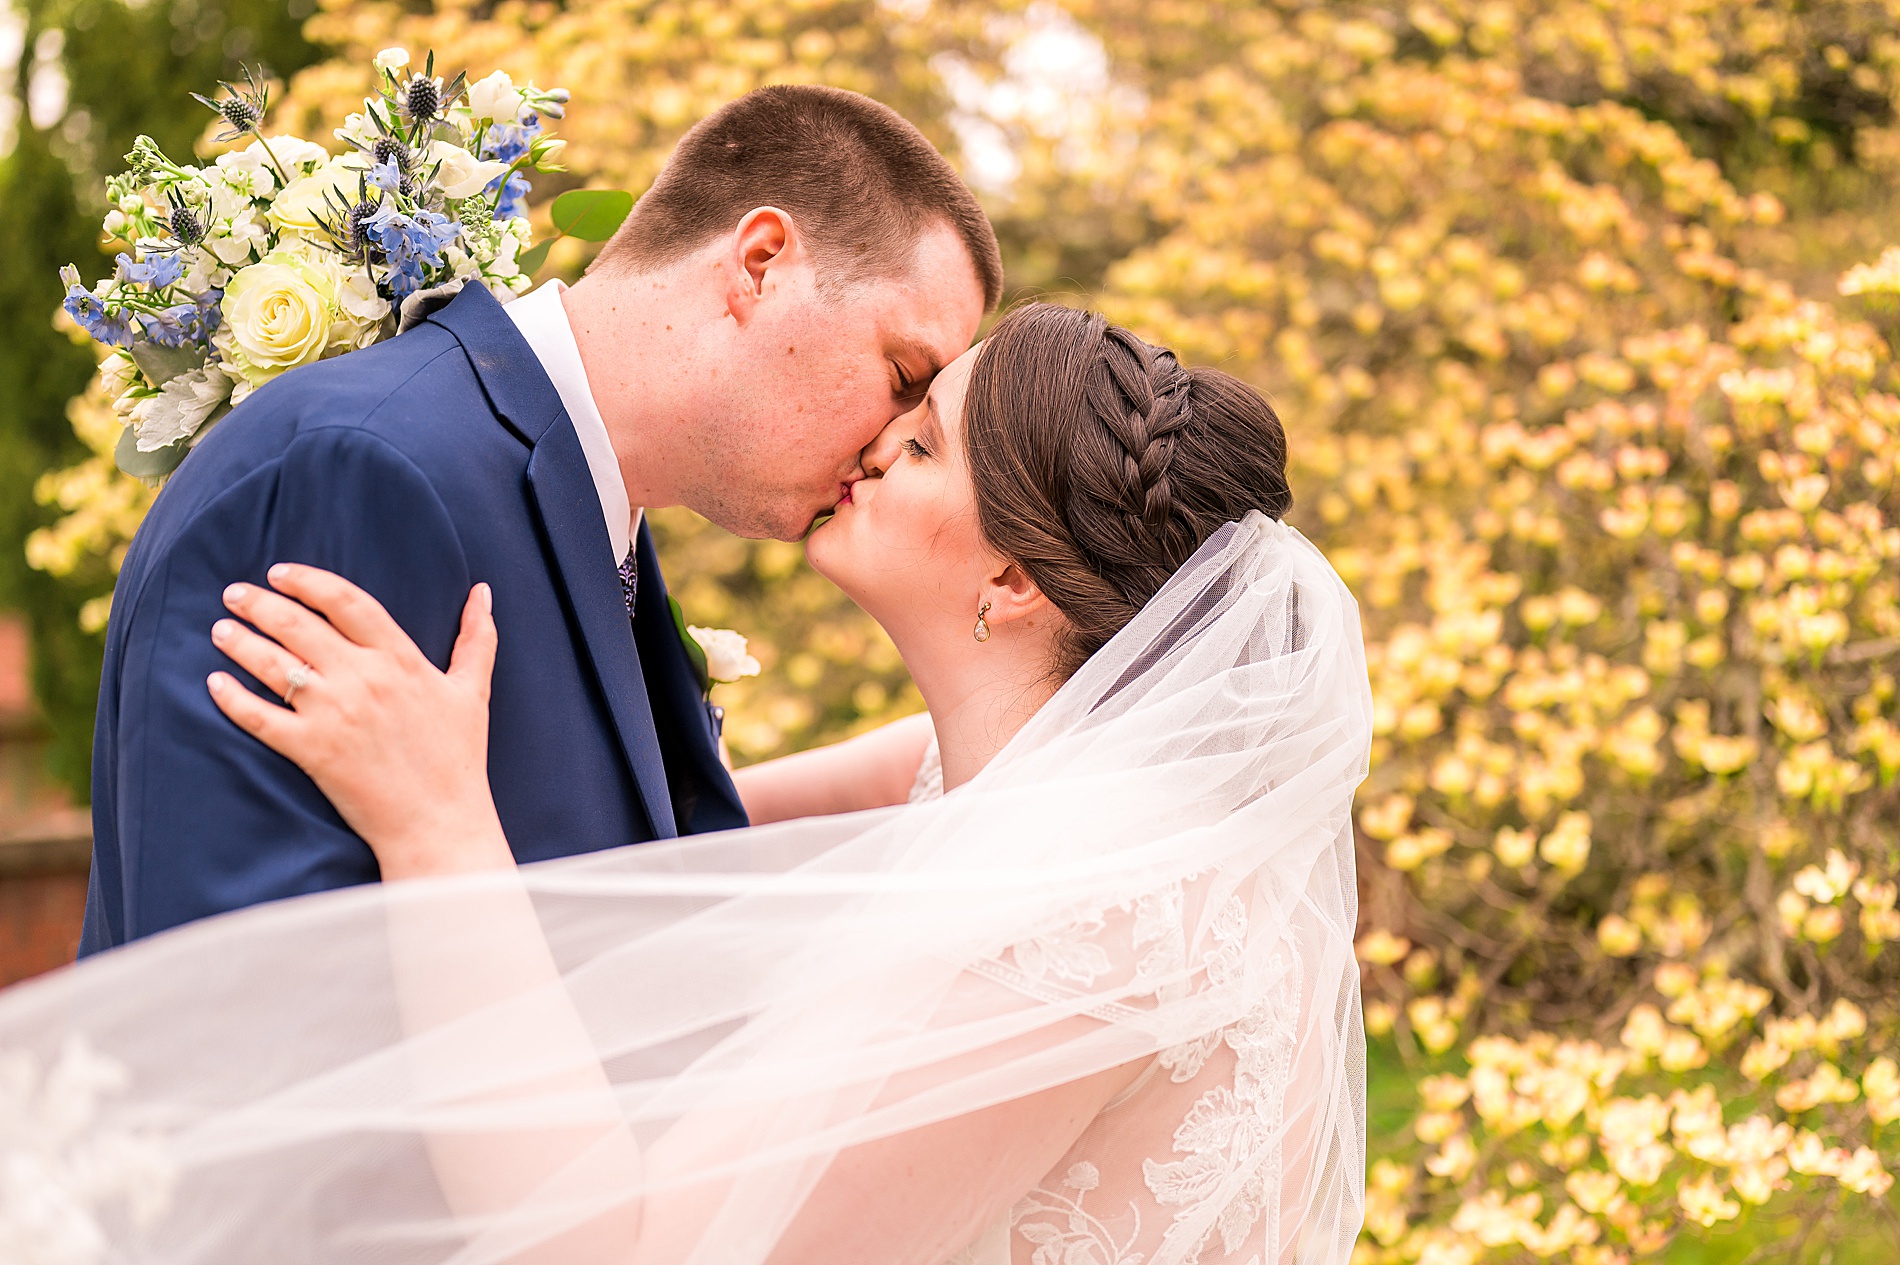 couple kiss as bride's veil wraps around them